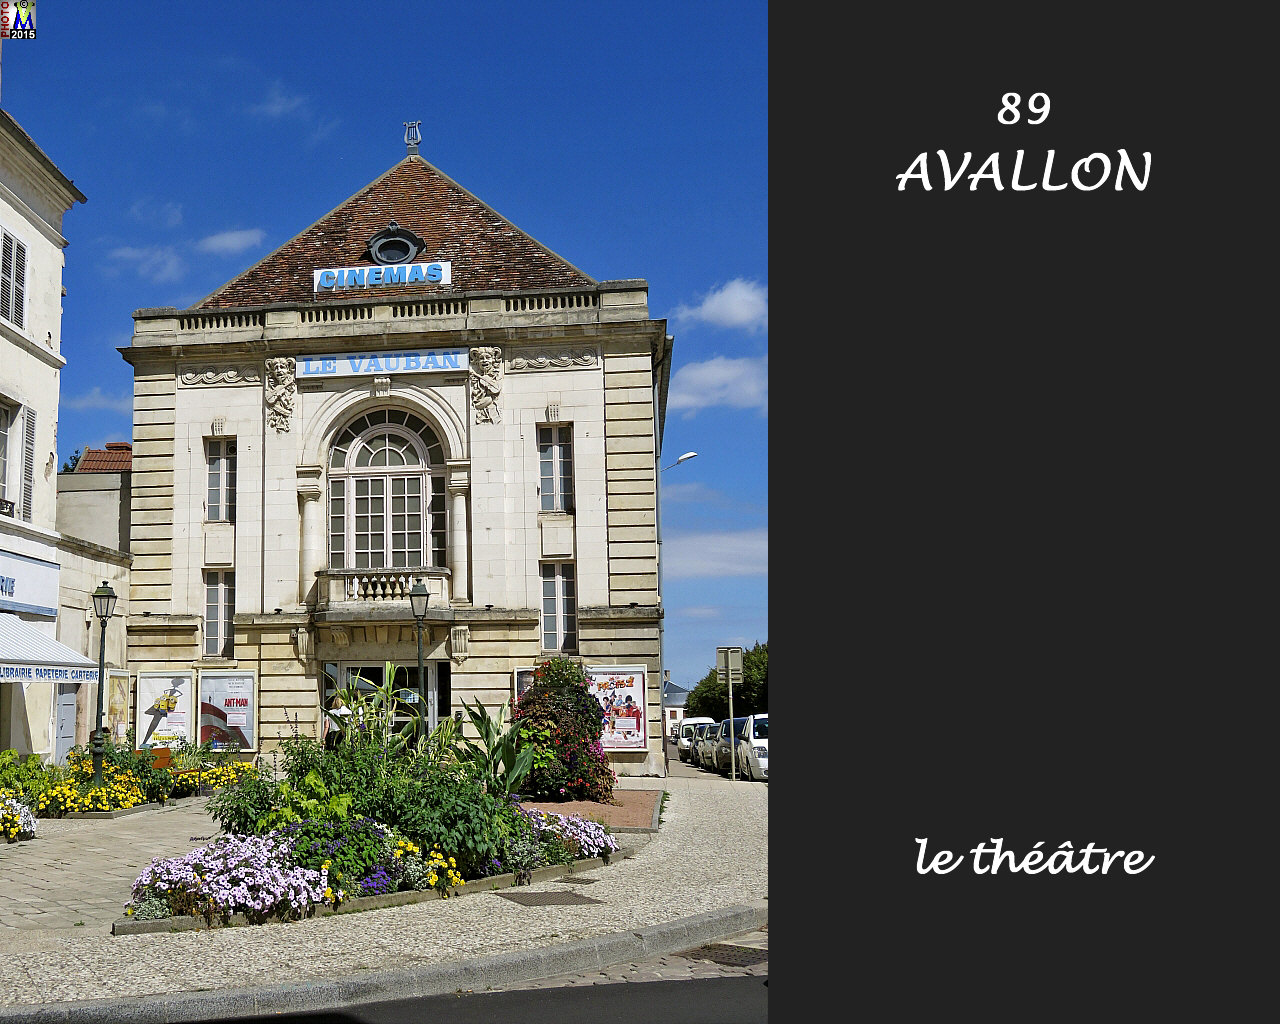 89AVALLON-theatre_100.jpg